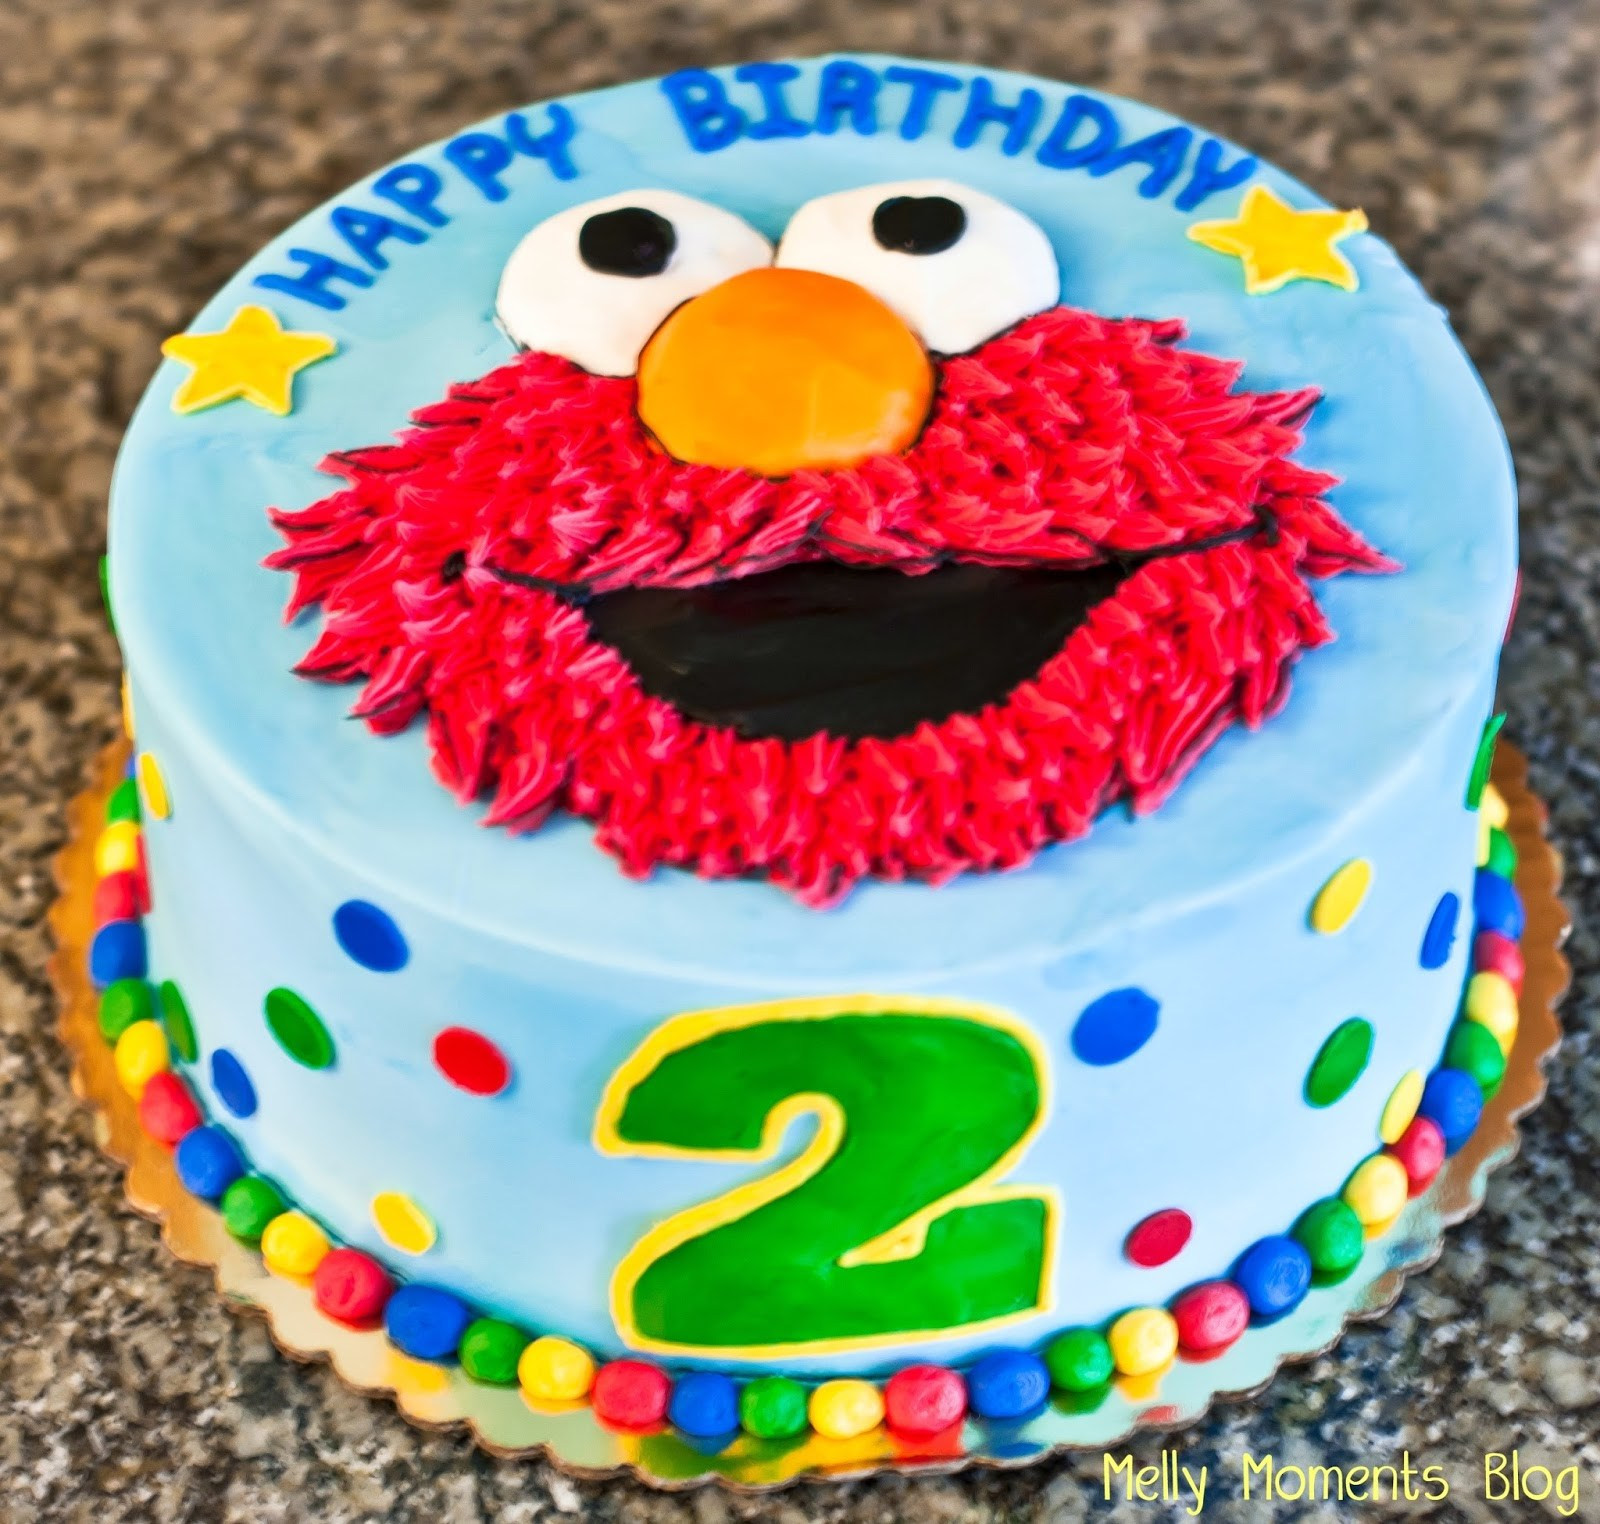 Best ideas about Elmo Birthday Cake
. Save or Pin Sesame Street & Elmo Themed Birthday Party Now.